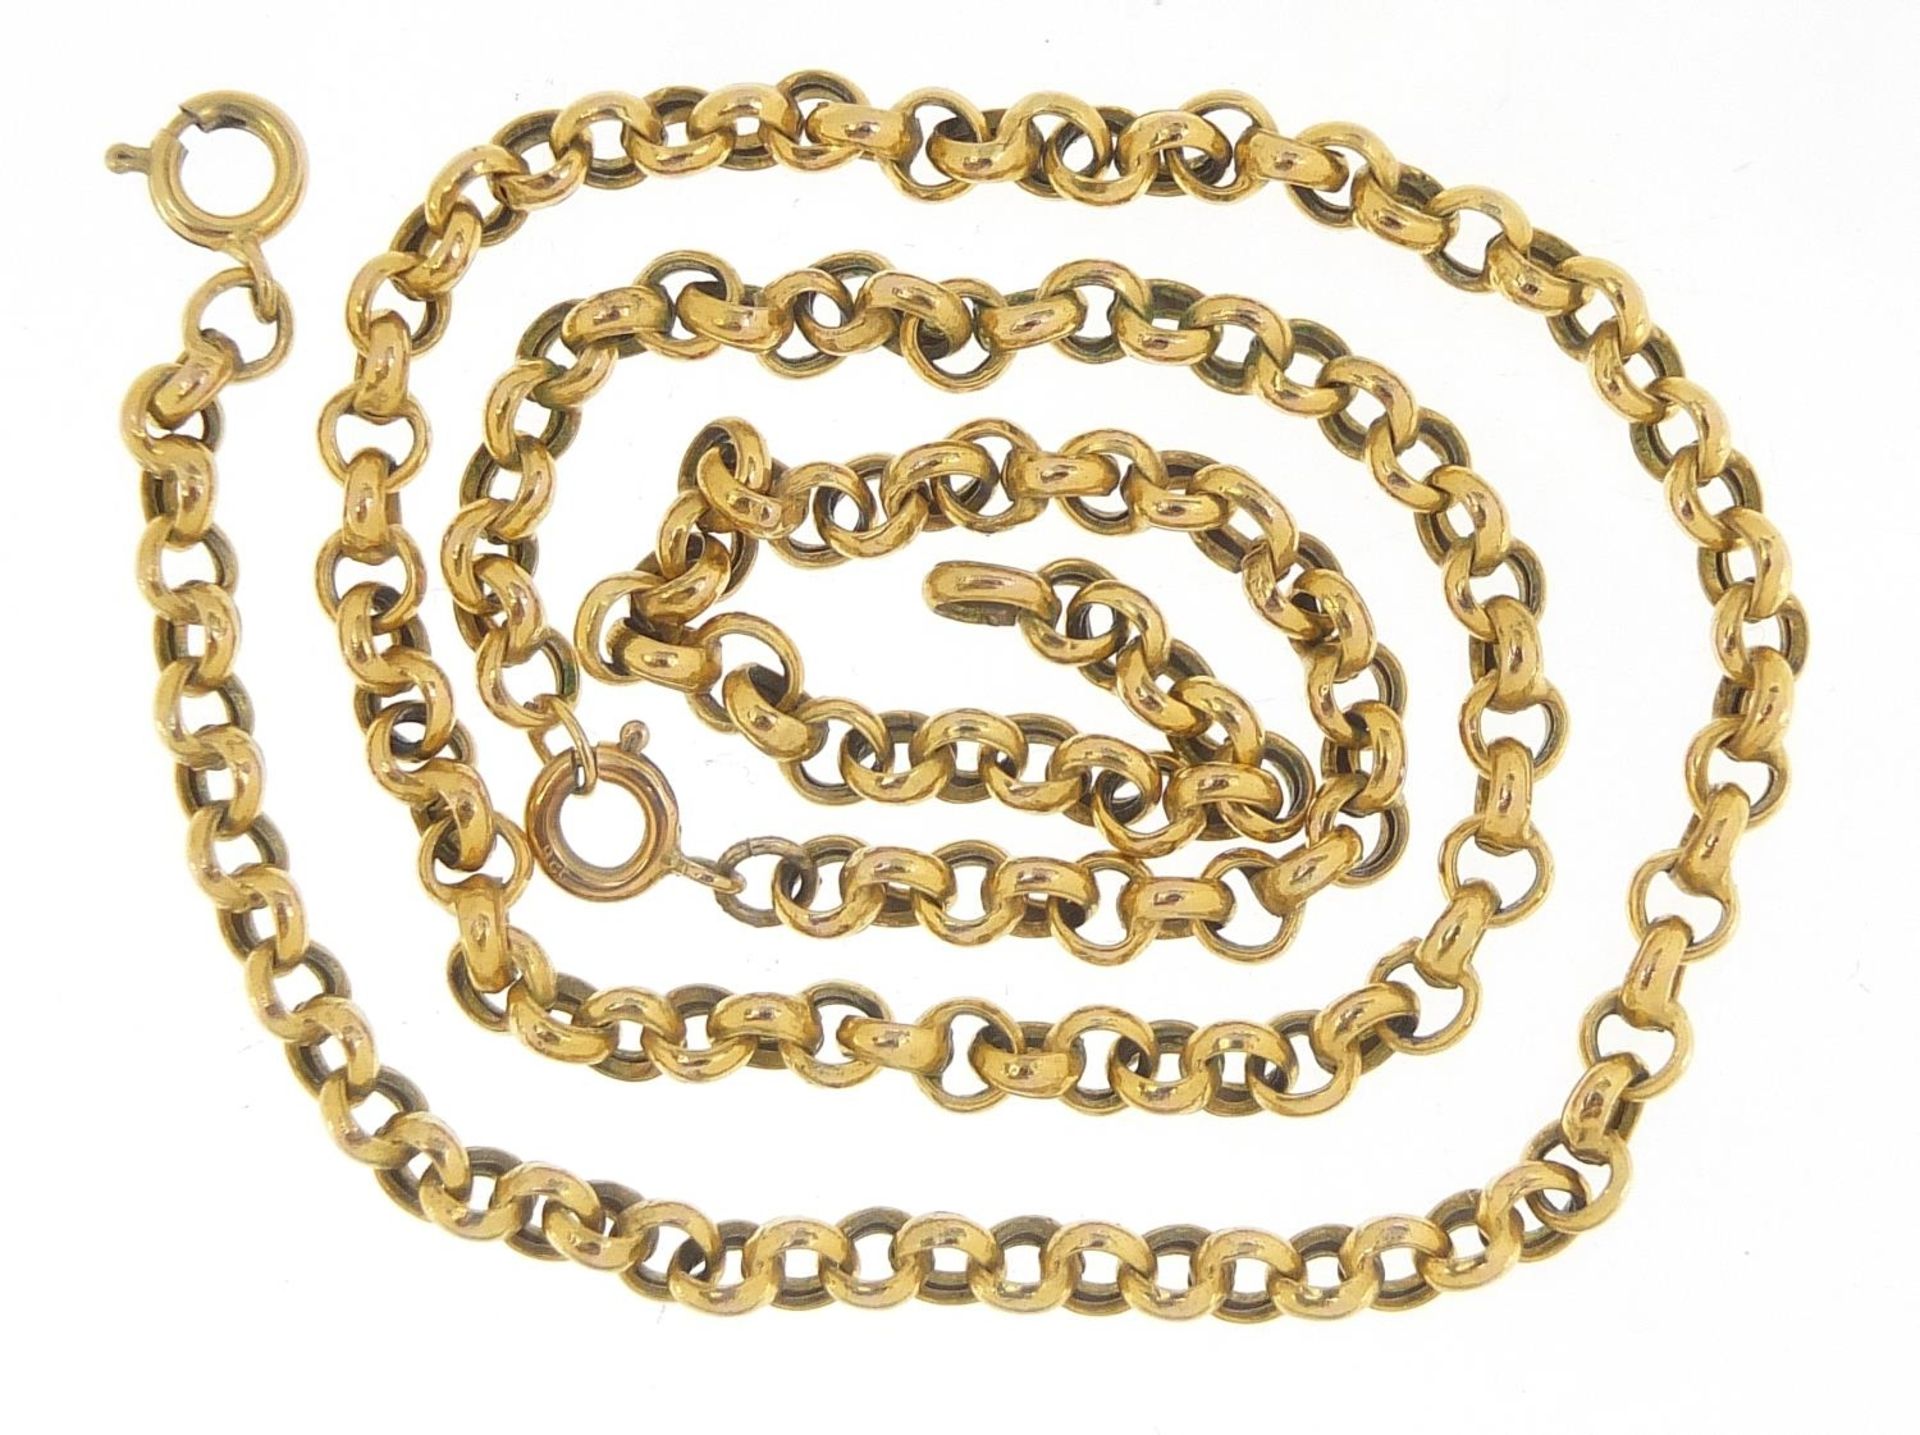 9ct gold Belcher link necklace, 42cm in length, 7.0g - Image 2 of 3